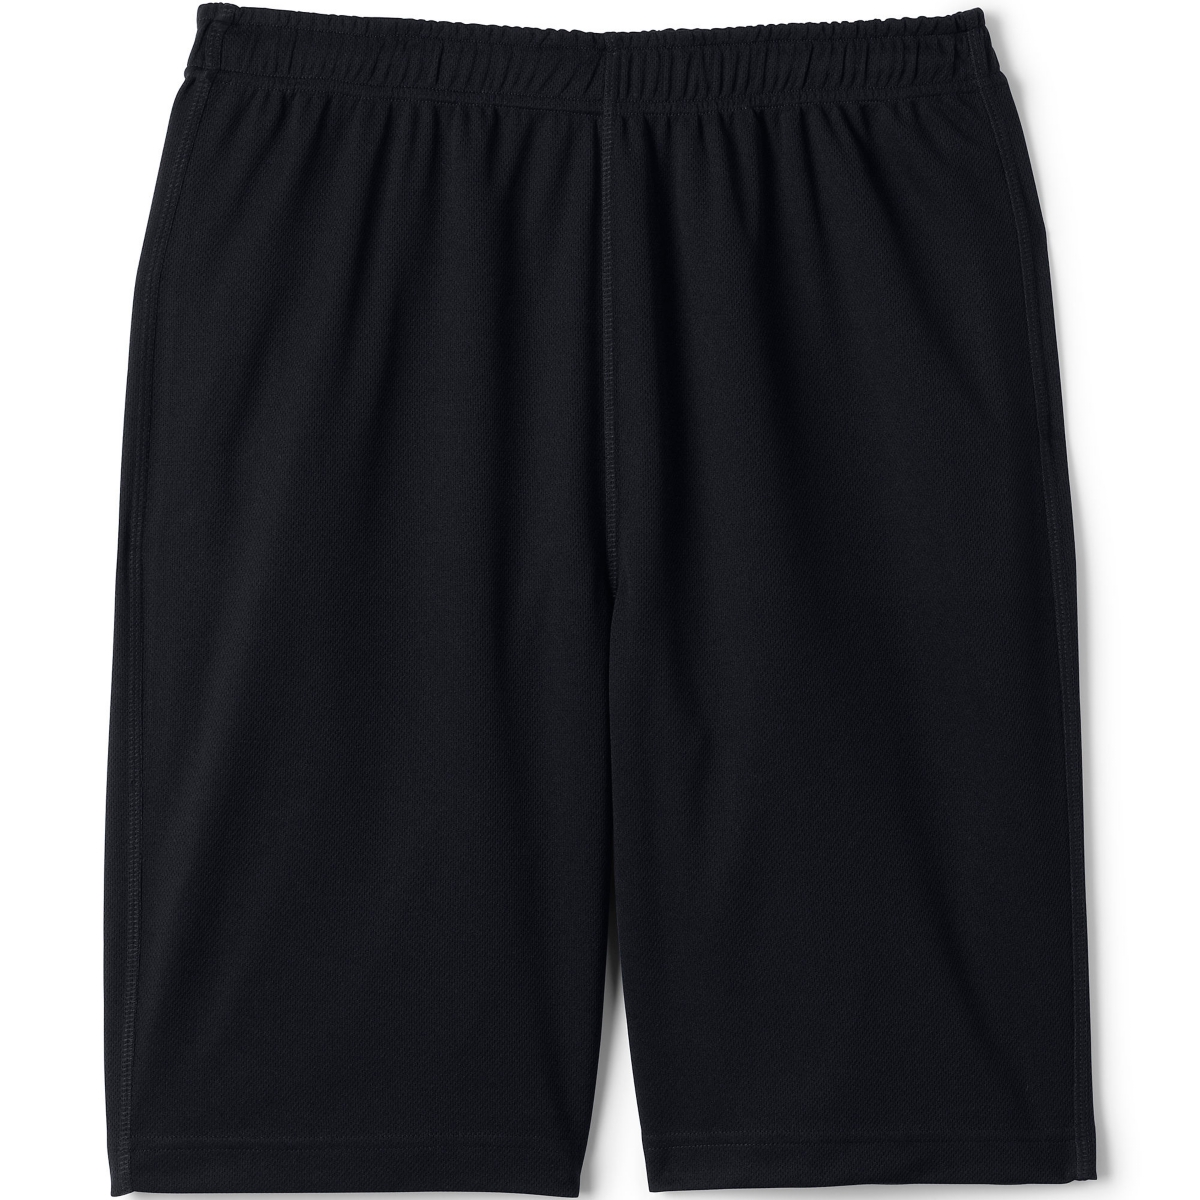 Men's School Uniform Mesh Gym Shorts - Stone gray